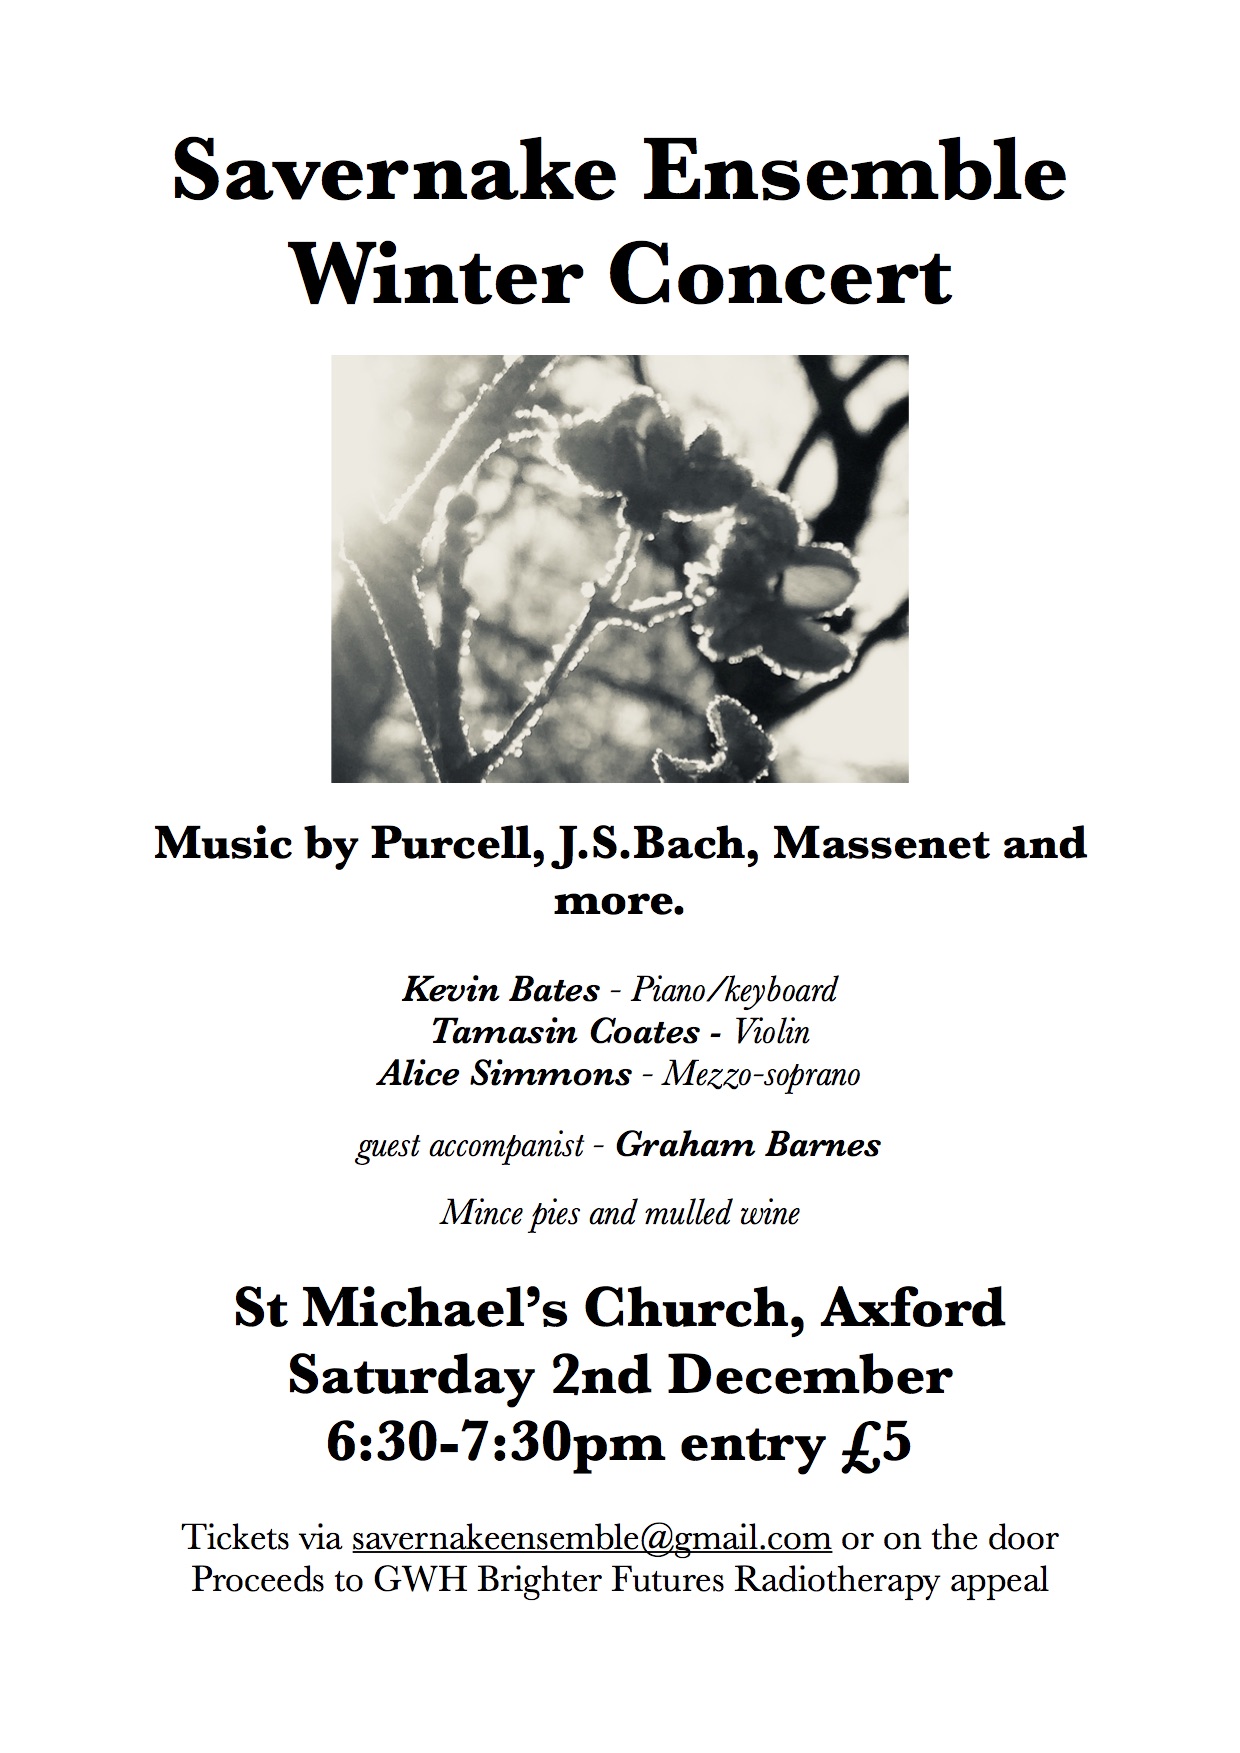 Winter concert poster 2017 pdf.jpg